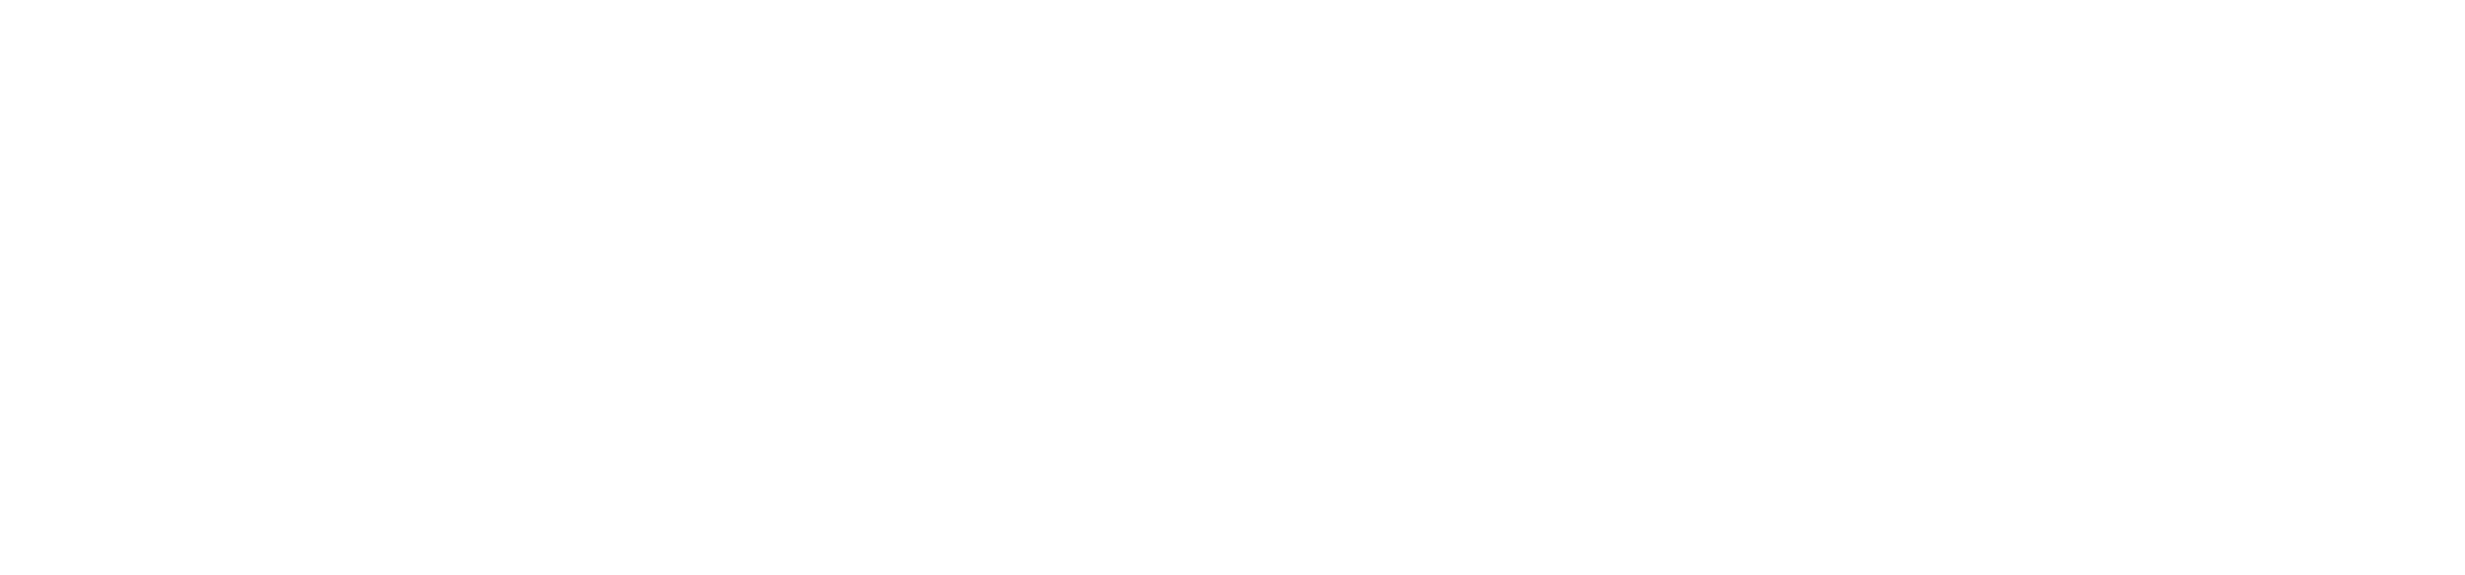 Westside Logo - Houston's Family Sports Fitness Club & Fitness at Club Westside